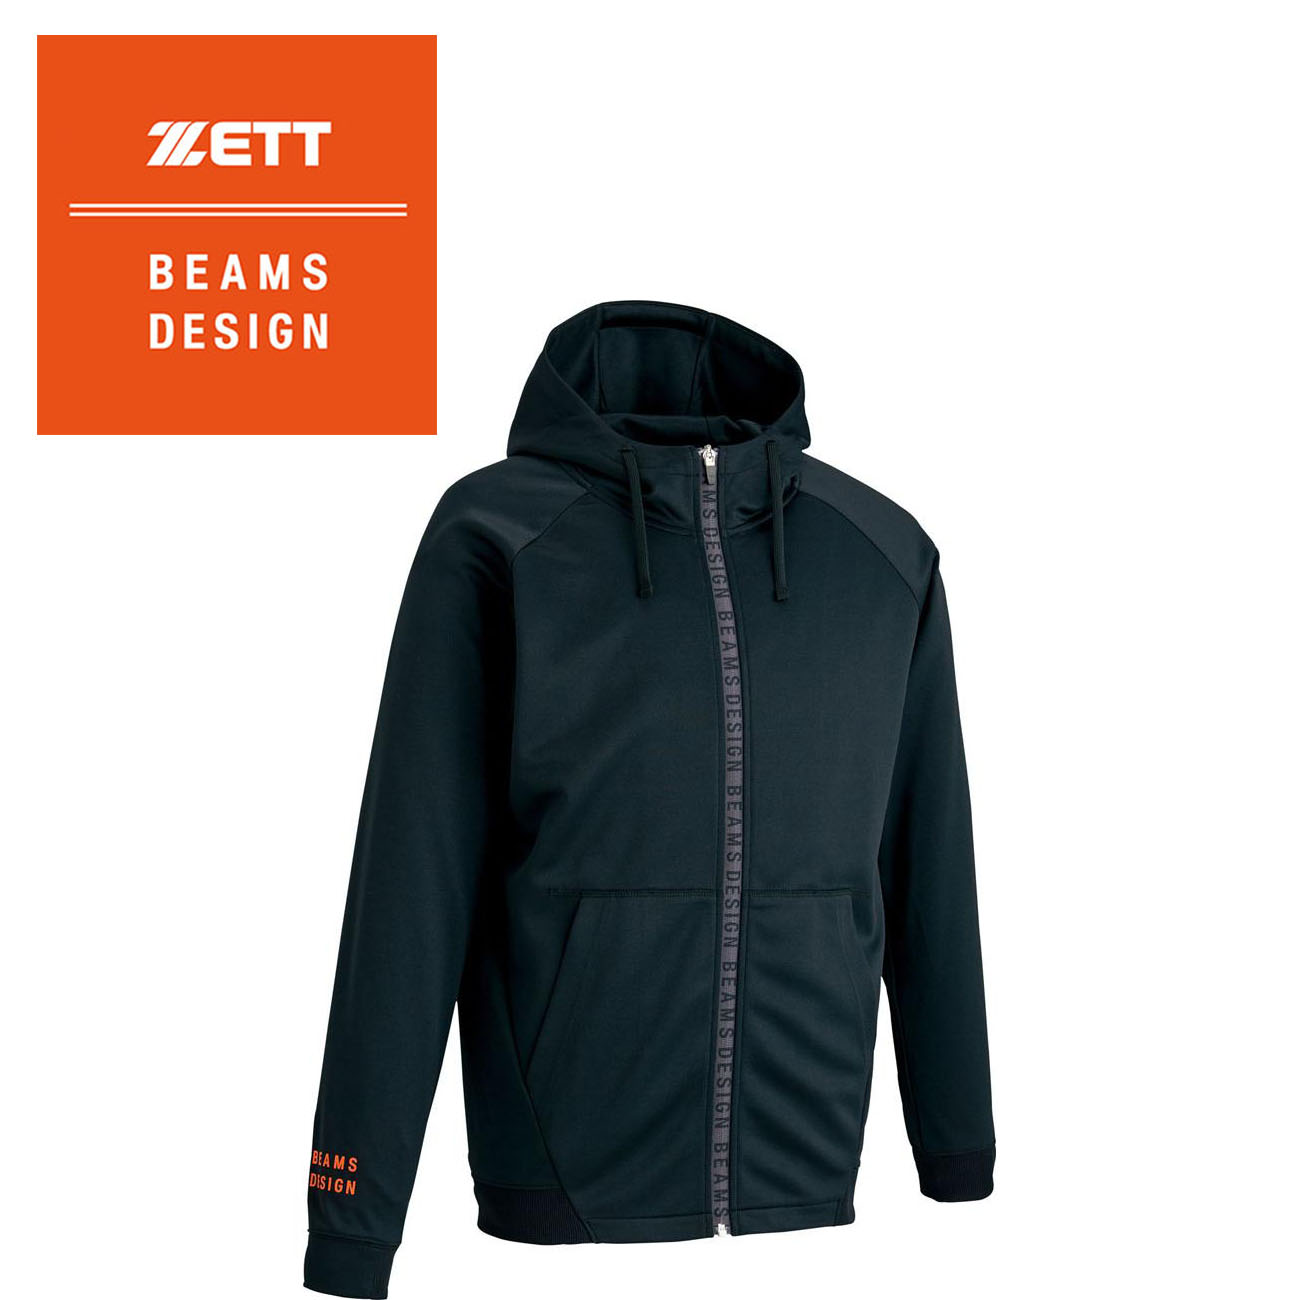 ZETT BEAMS DESIGN フルジップパーカー | 総合スポーツ企業グループ 